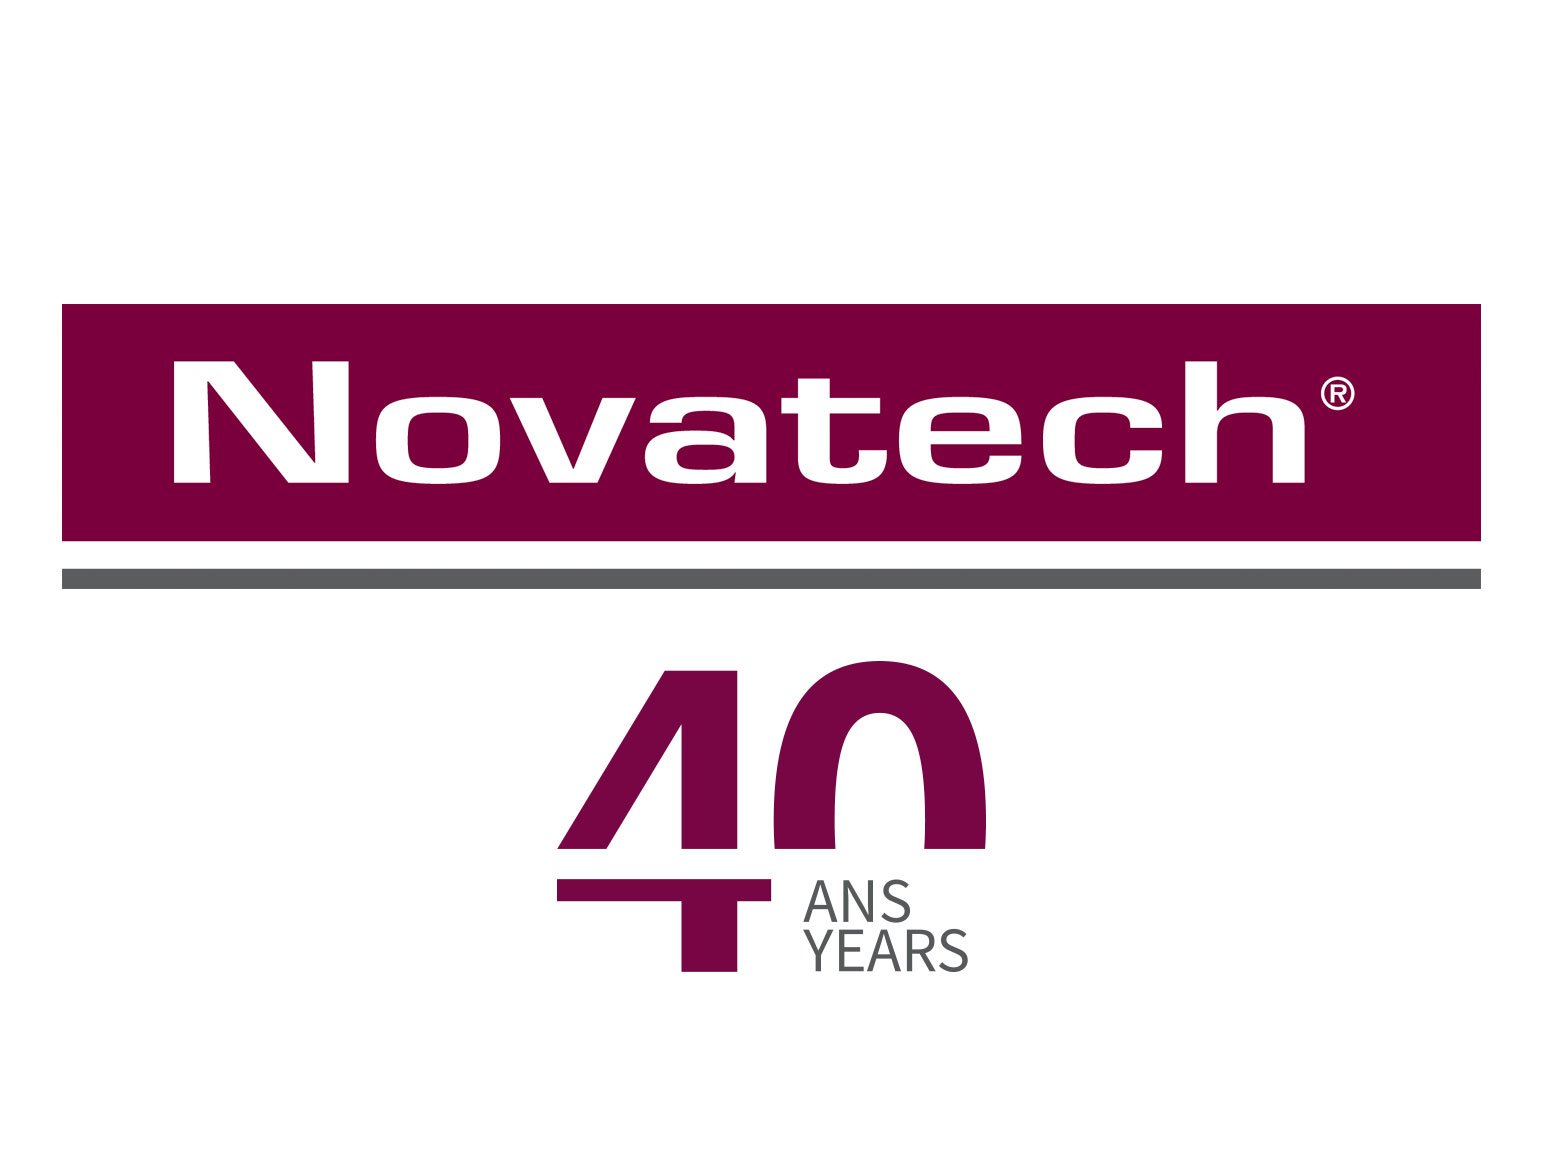 Novatech Group celebrates its 40th anniversary.